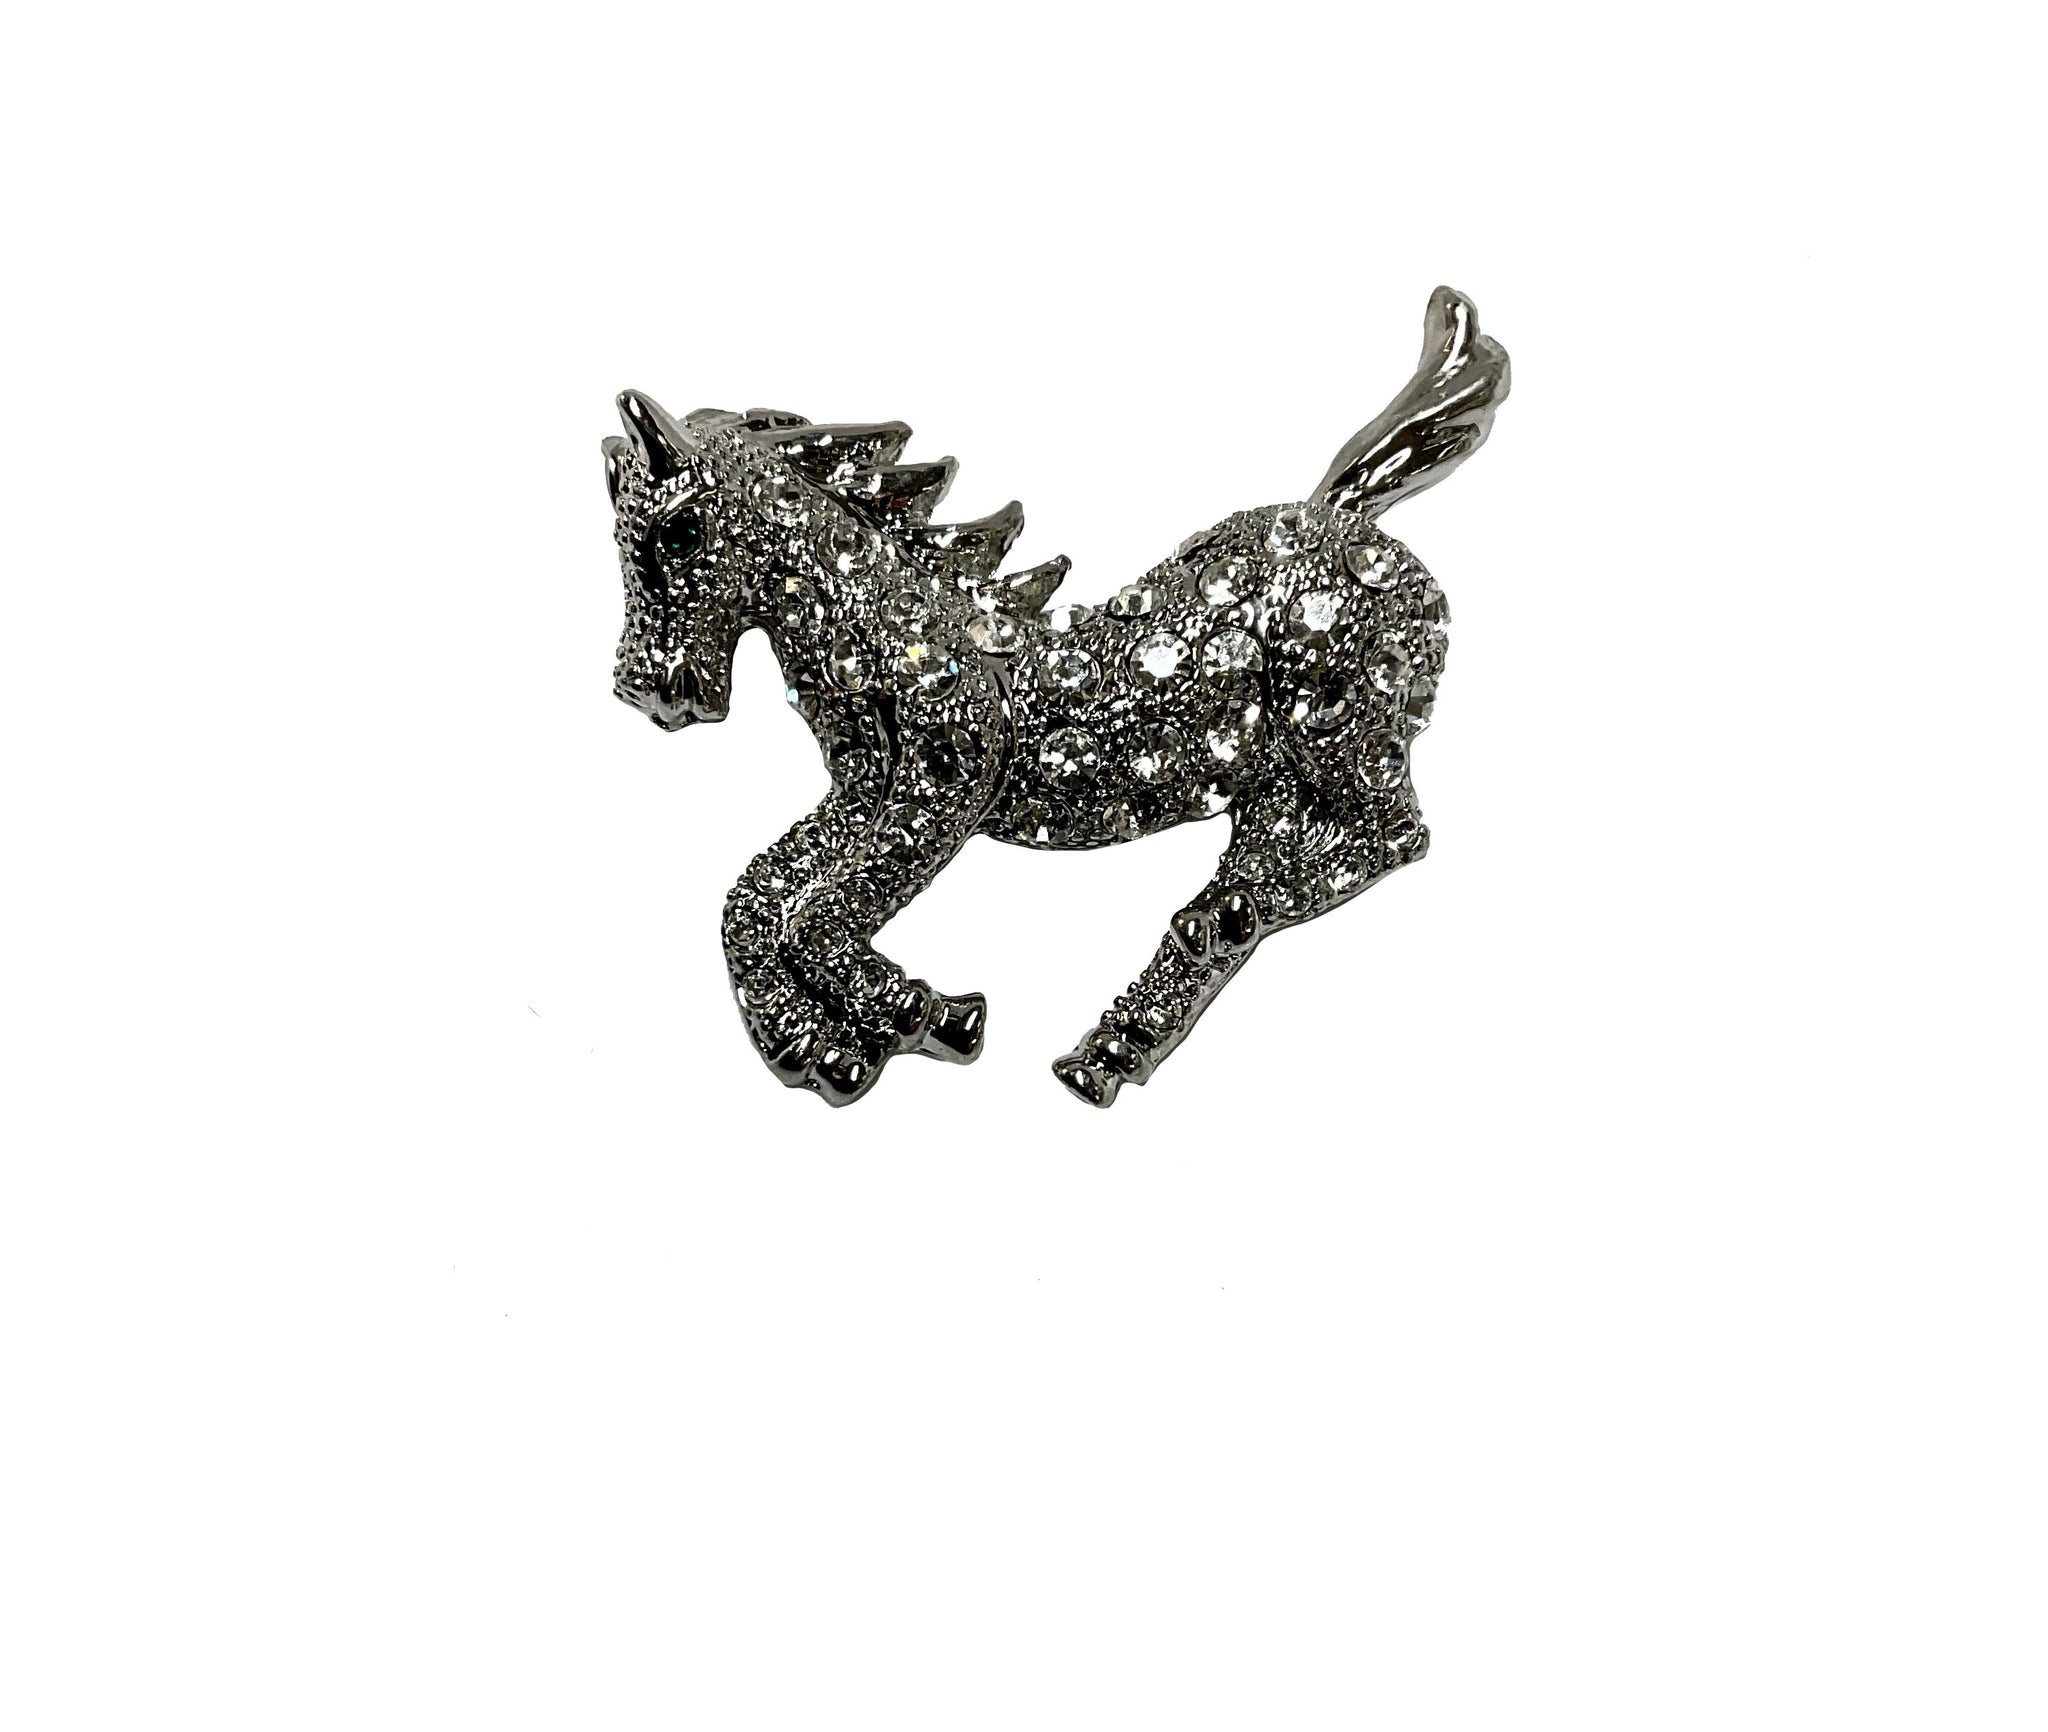 Running Horse Pin#38-1540